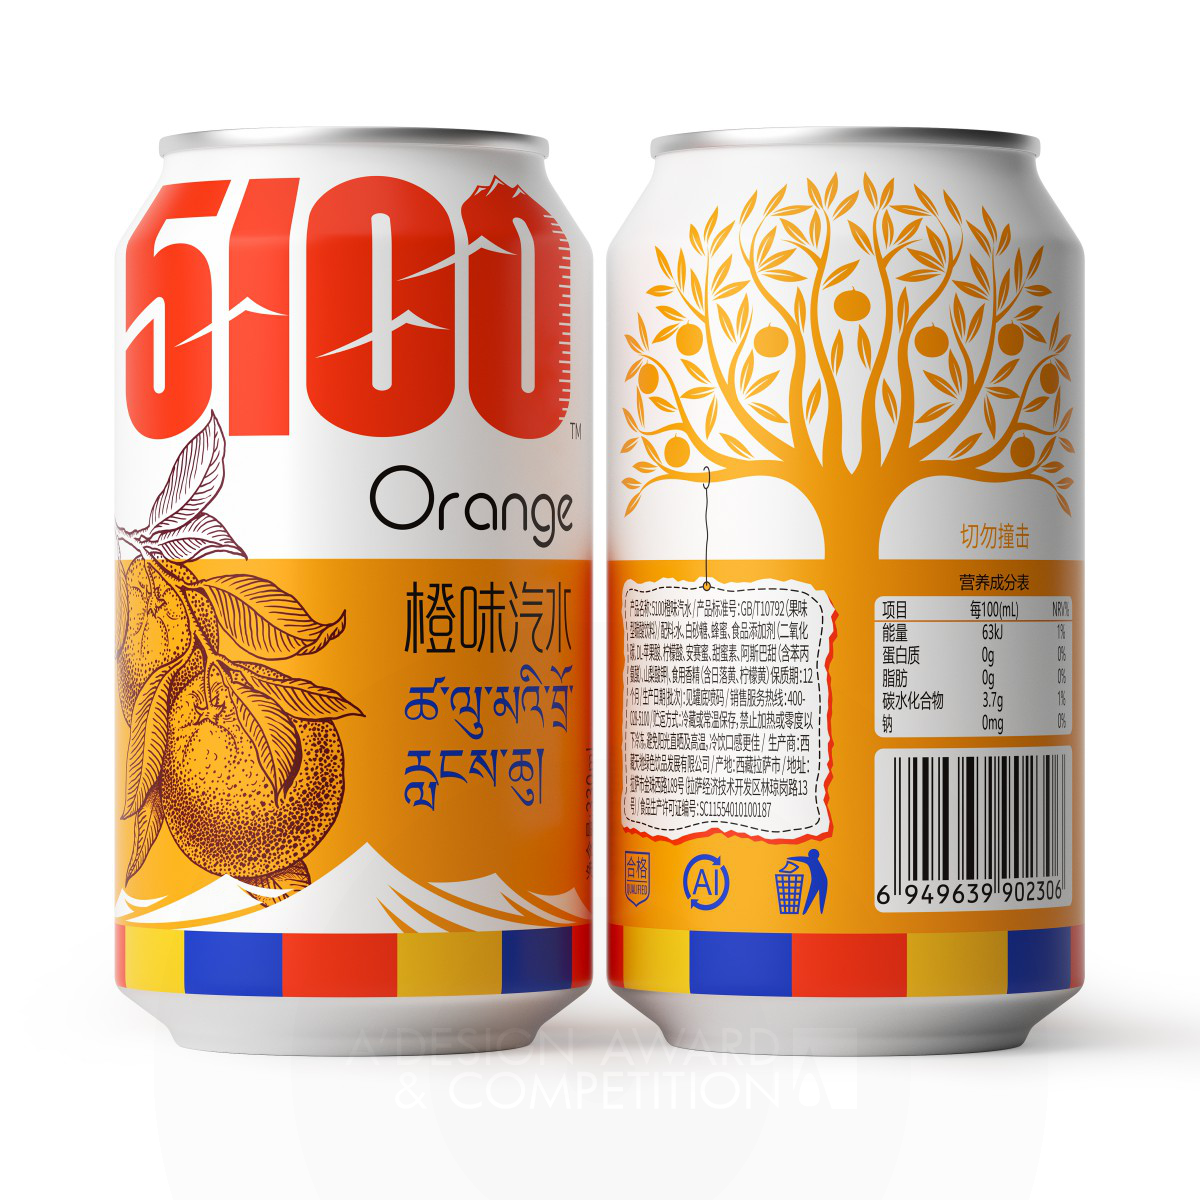 5100 Fizzy Orange by Yang Bo